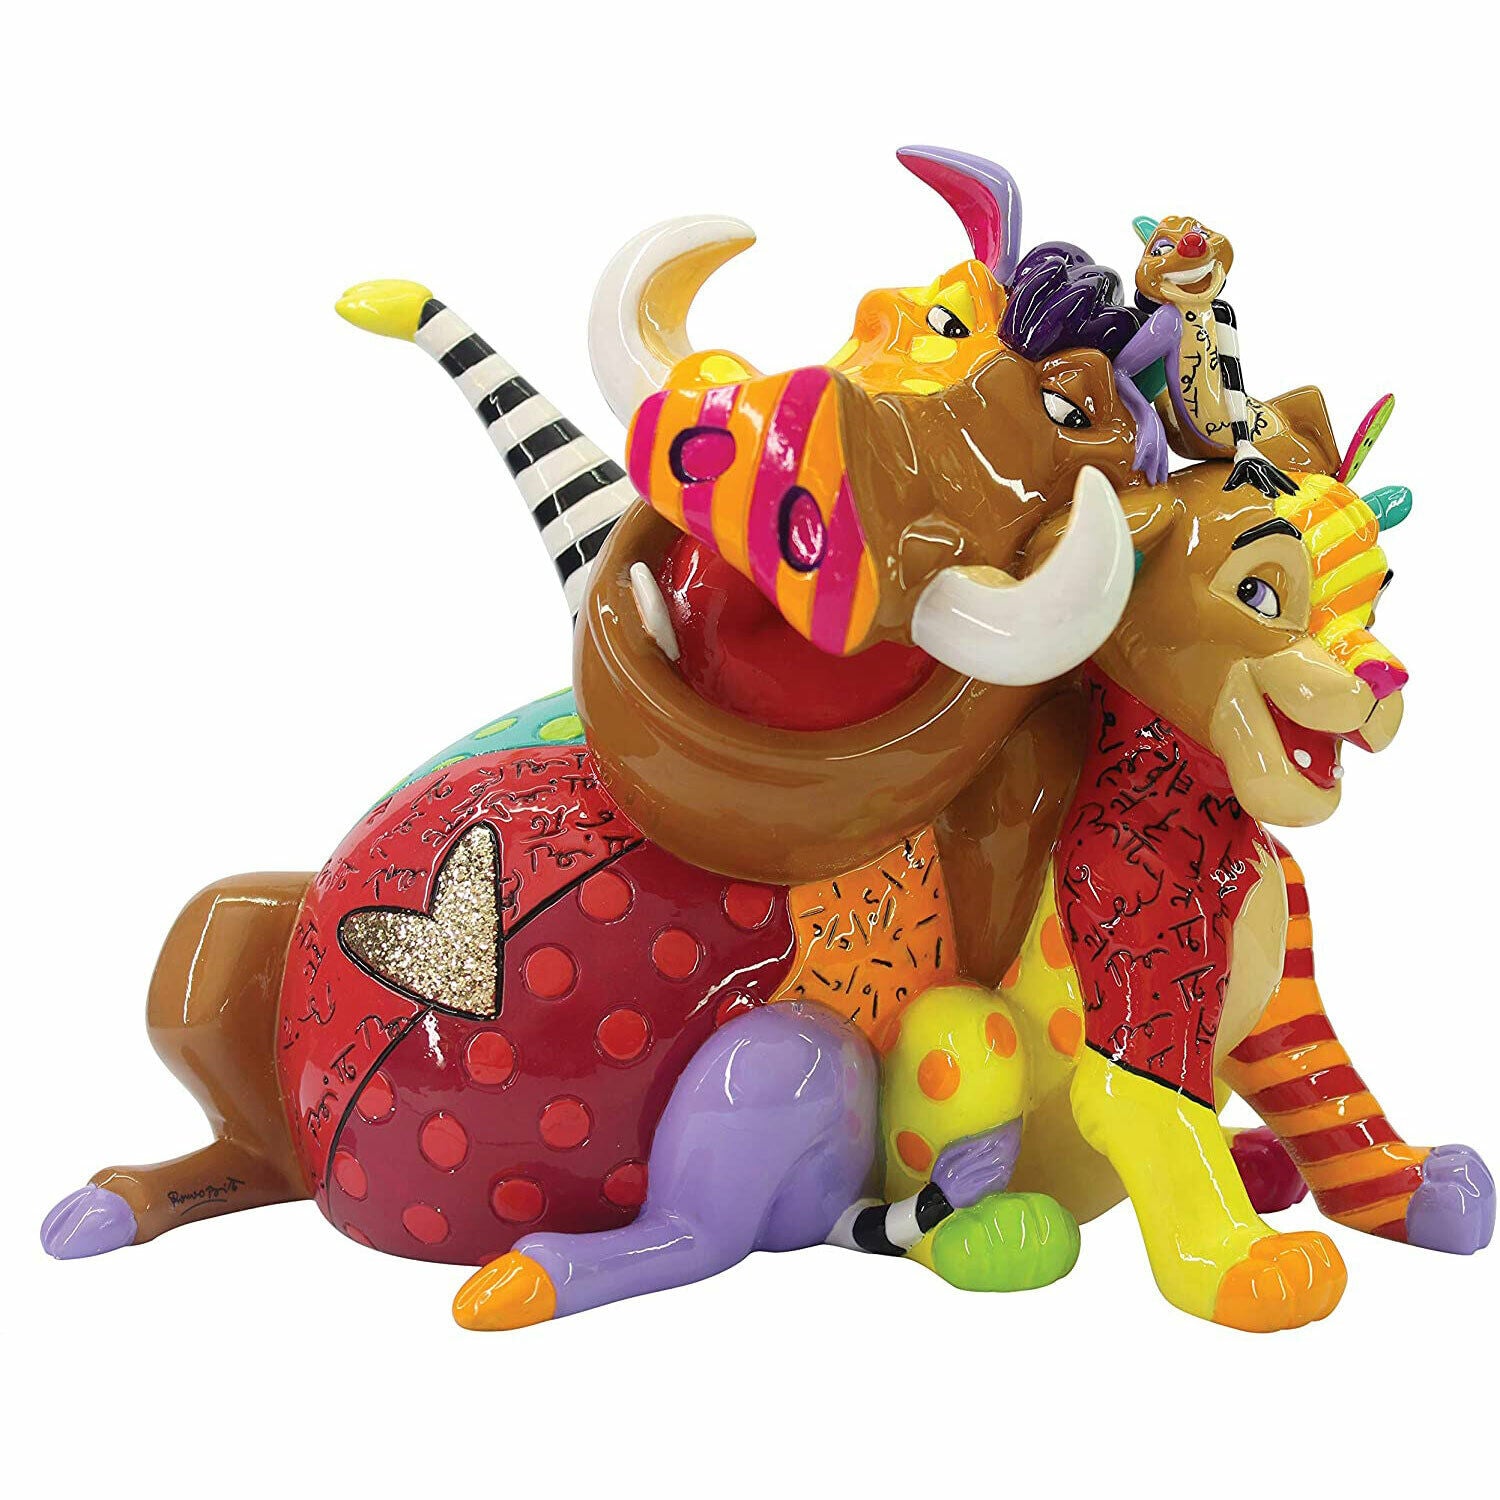 BRAND NEW Disney Britto Simba, Timon & Pumbaa Figurine - The Lion King